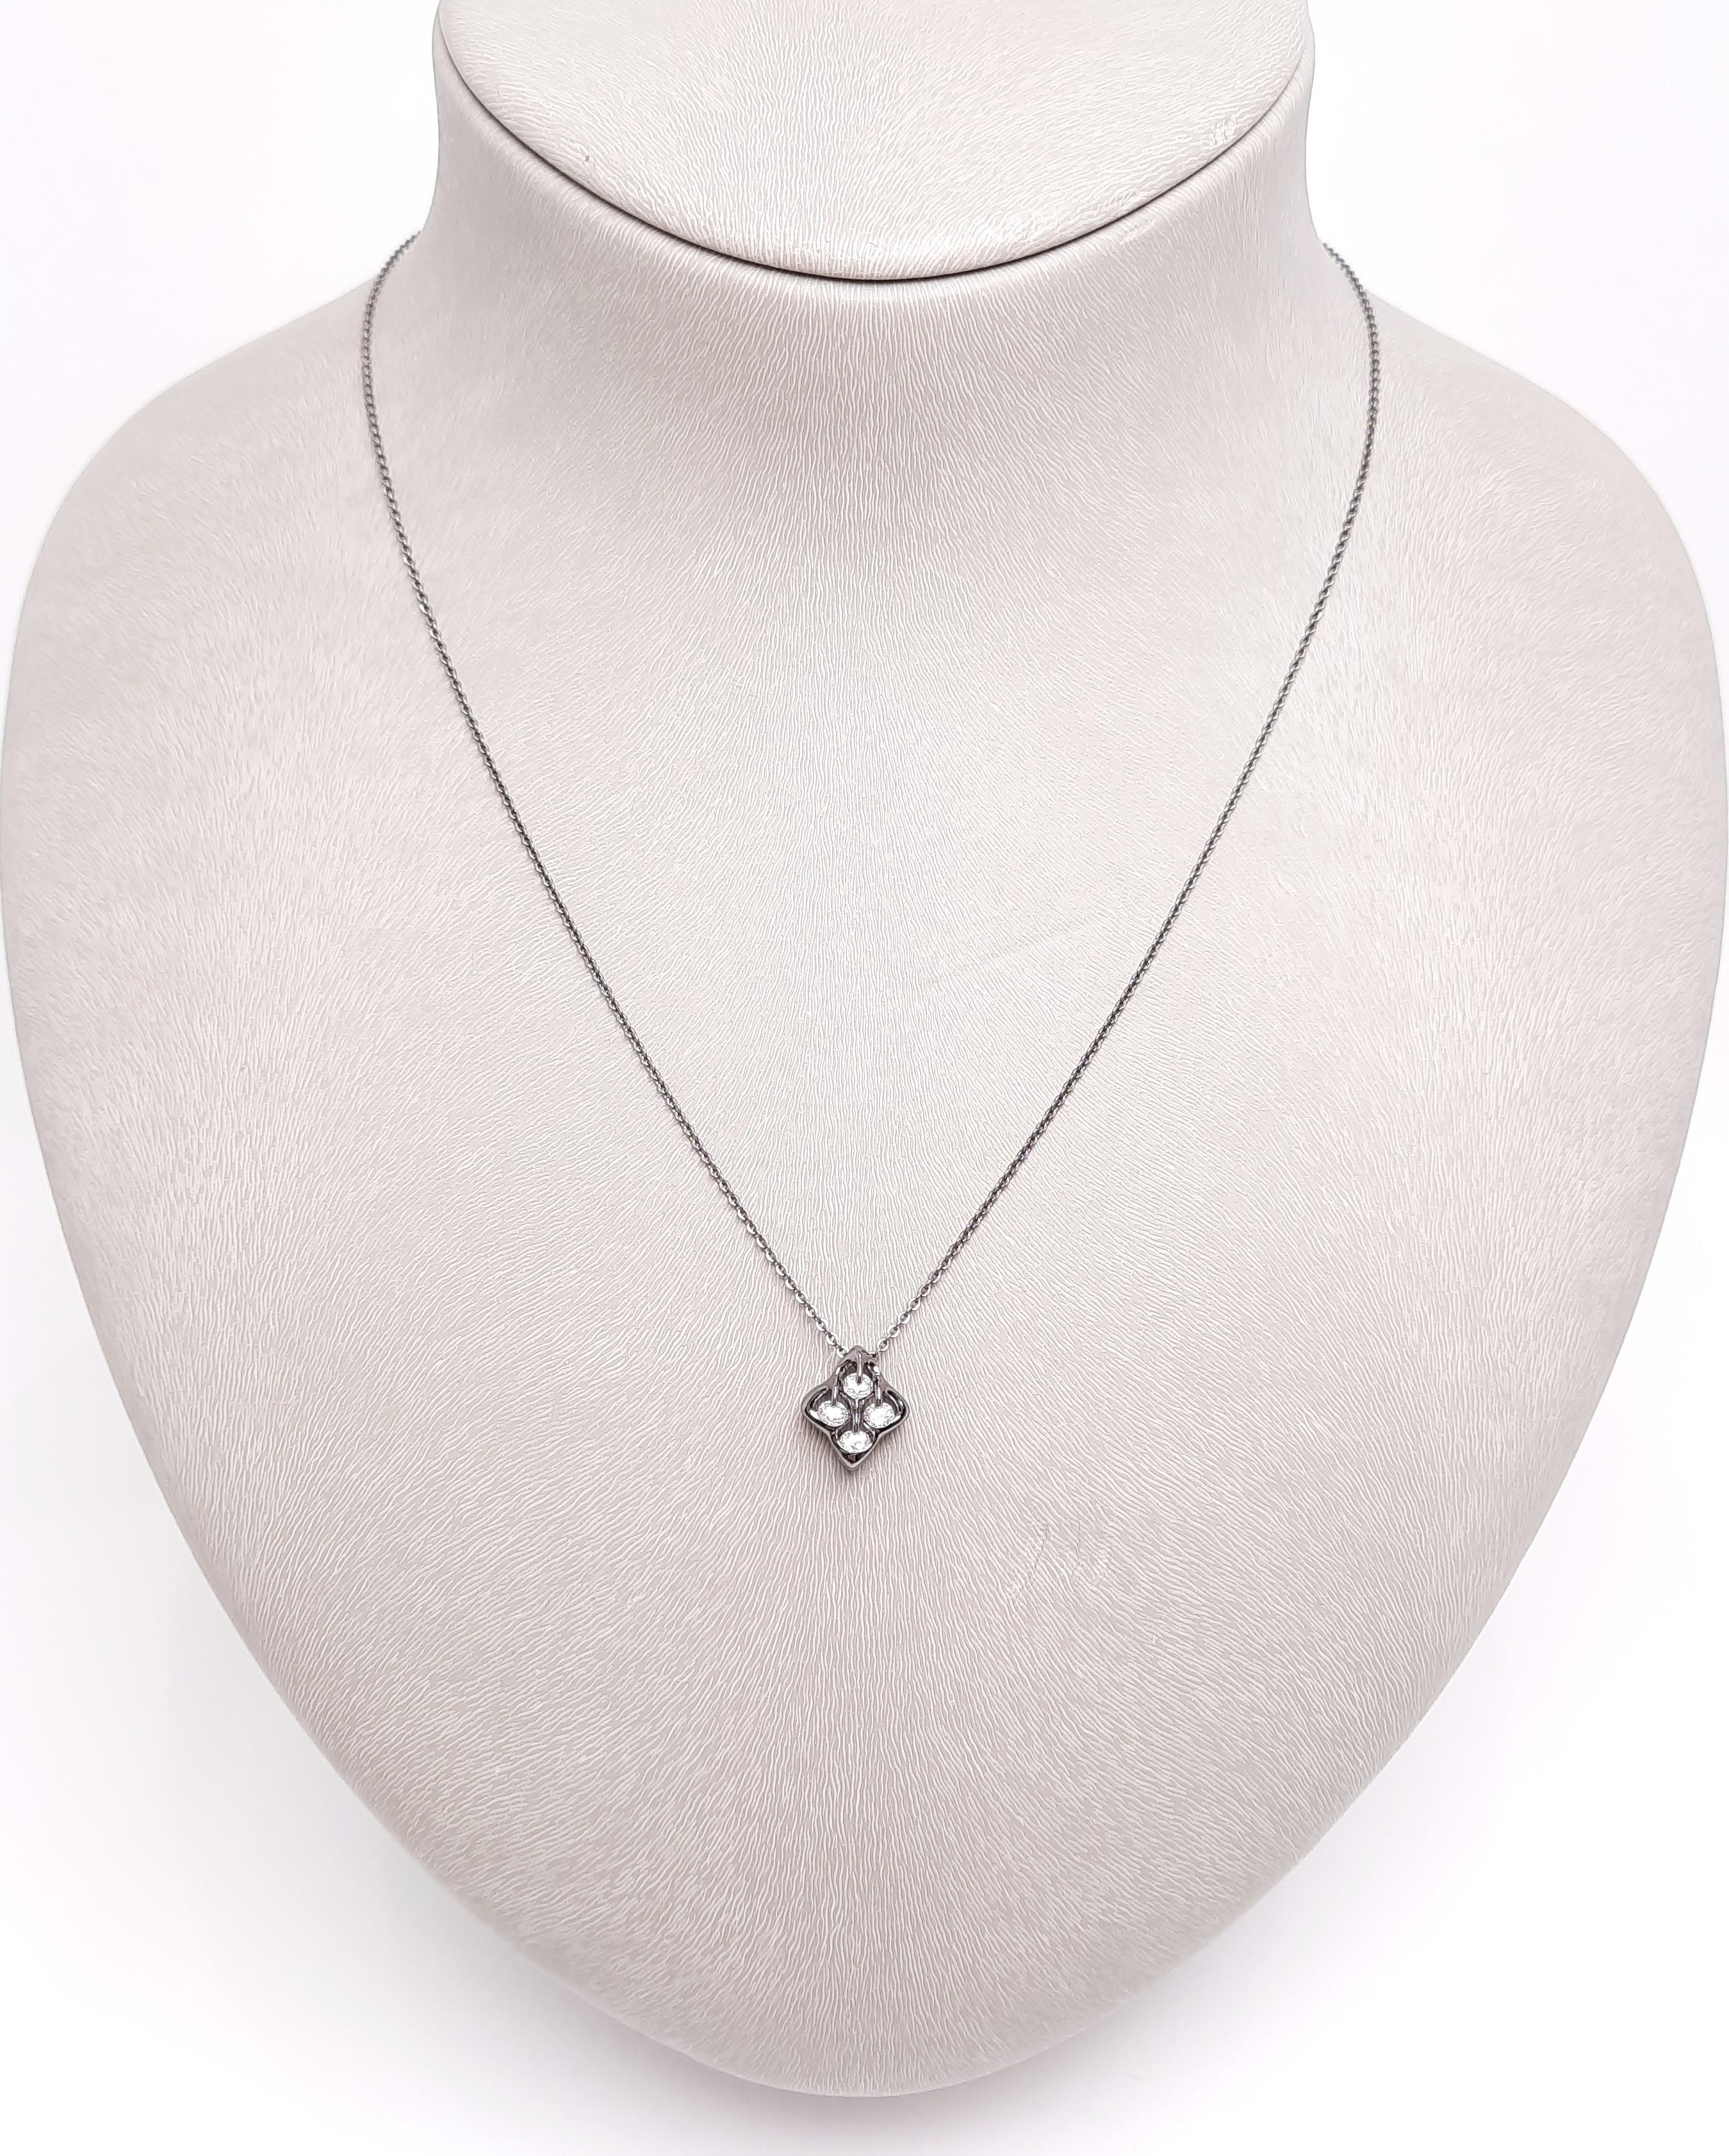 Contemporary Moiseikin 18K White Gold Diamond Necklace Gift Promotion